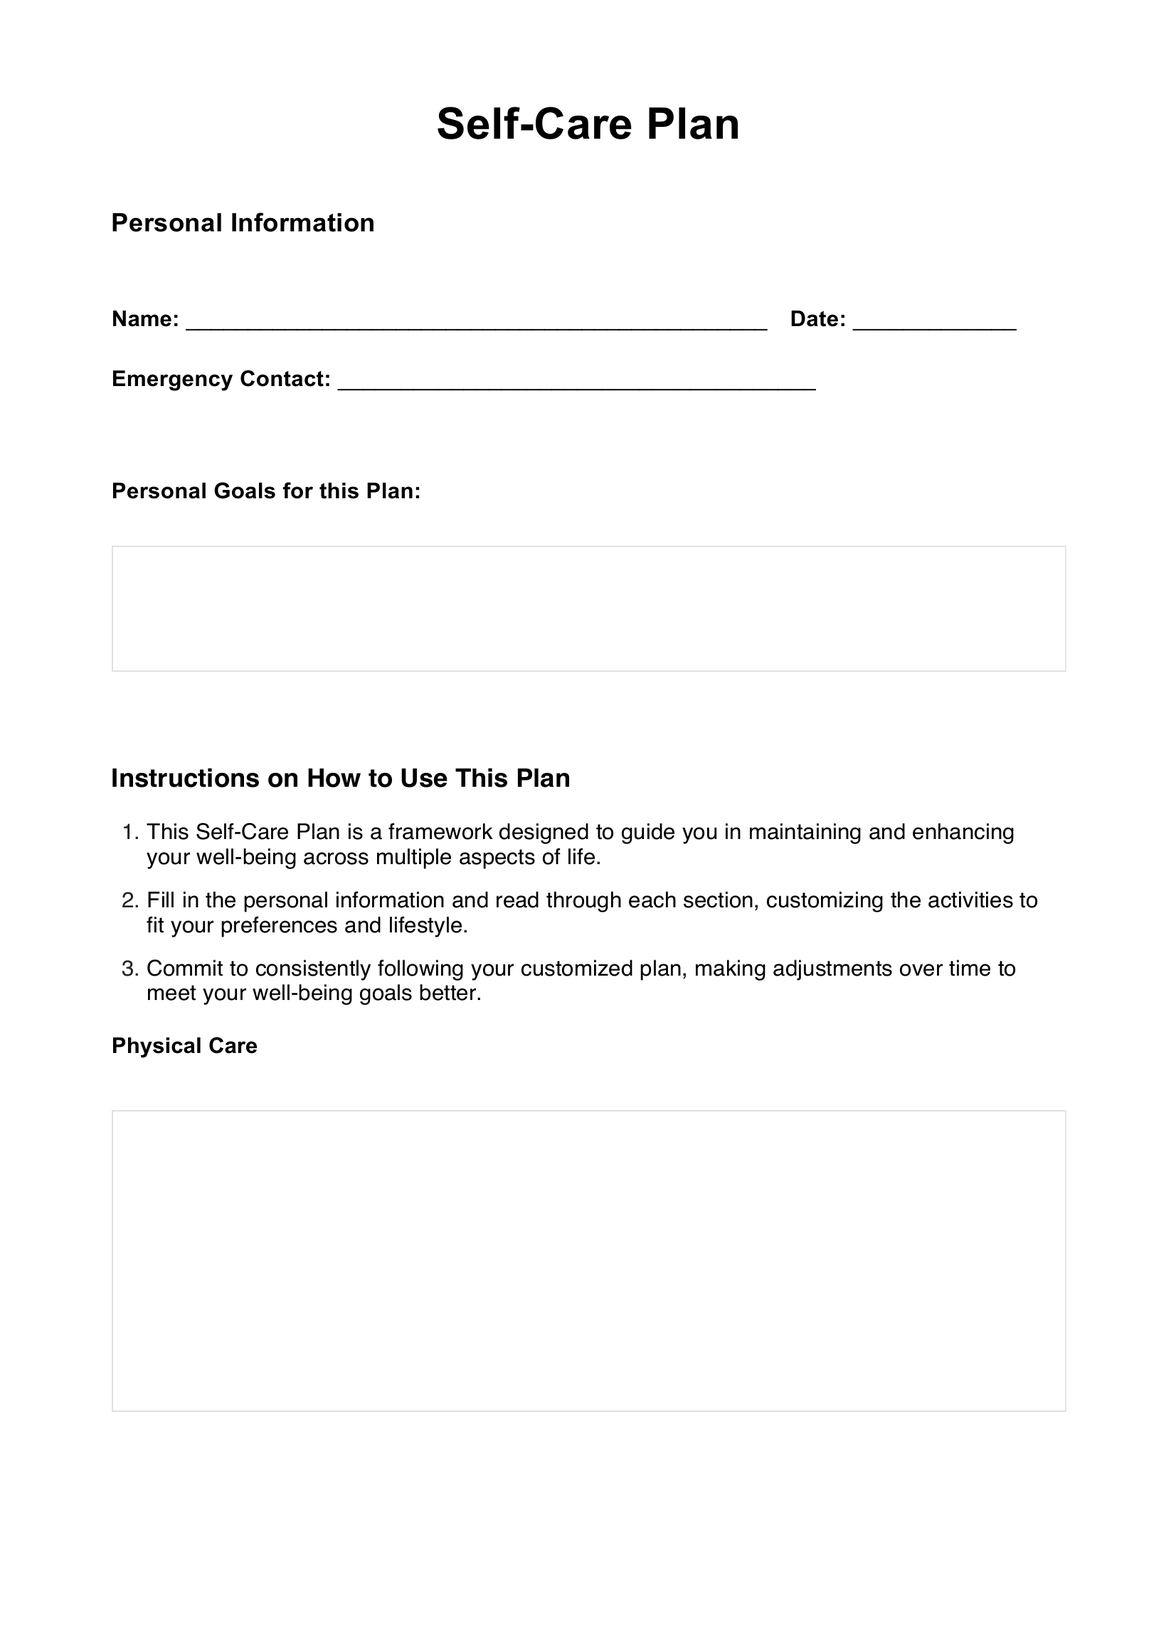 Self-Care Plan PDF Example